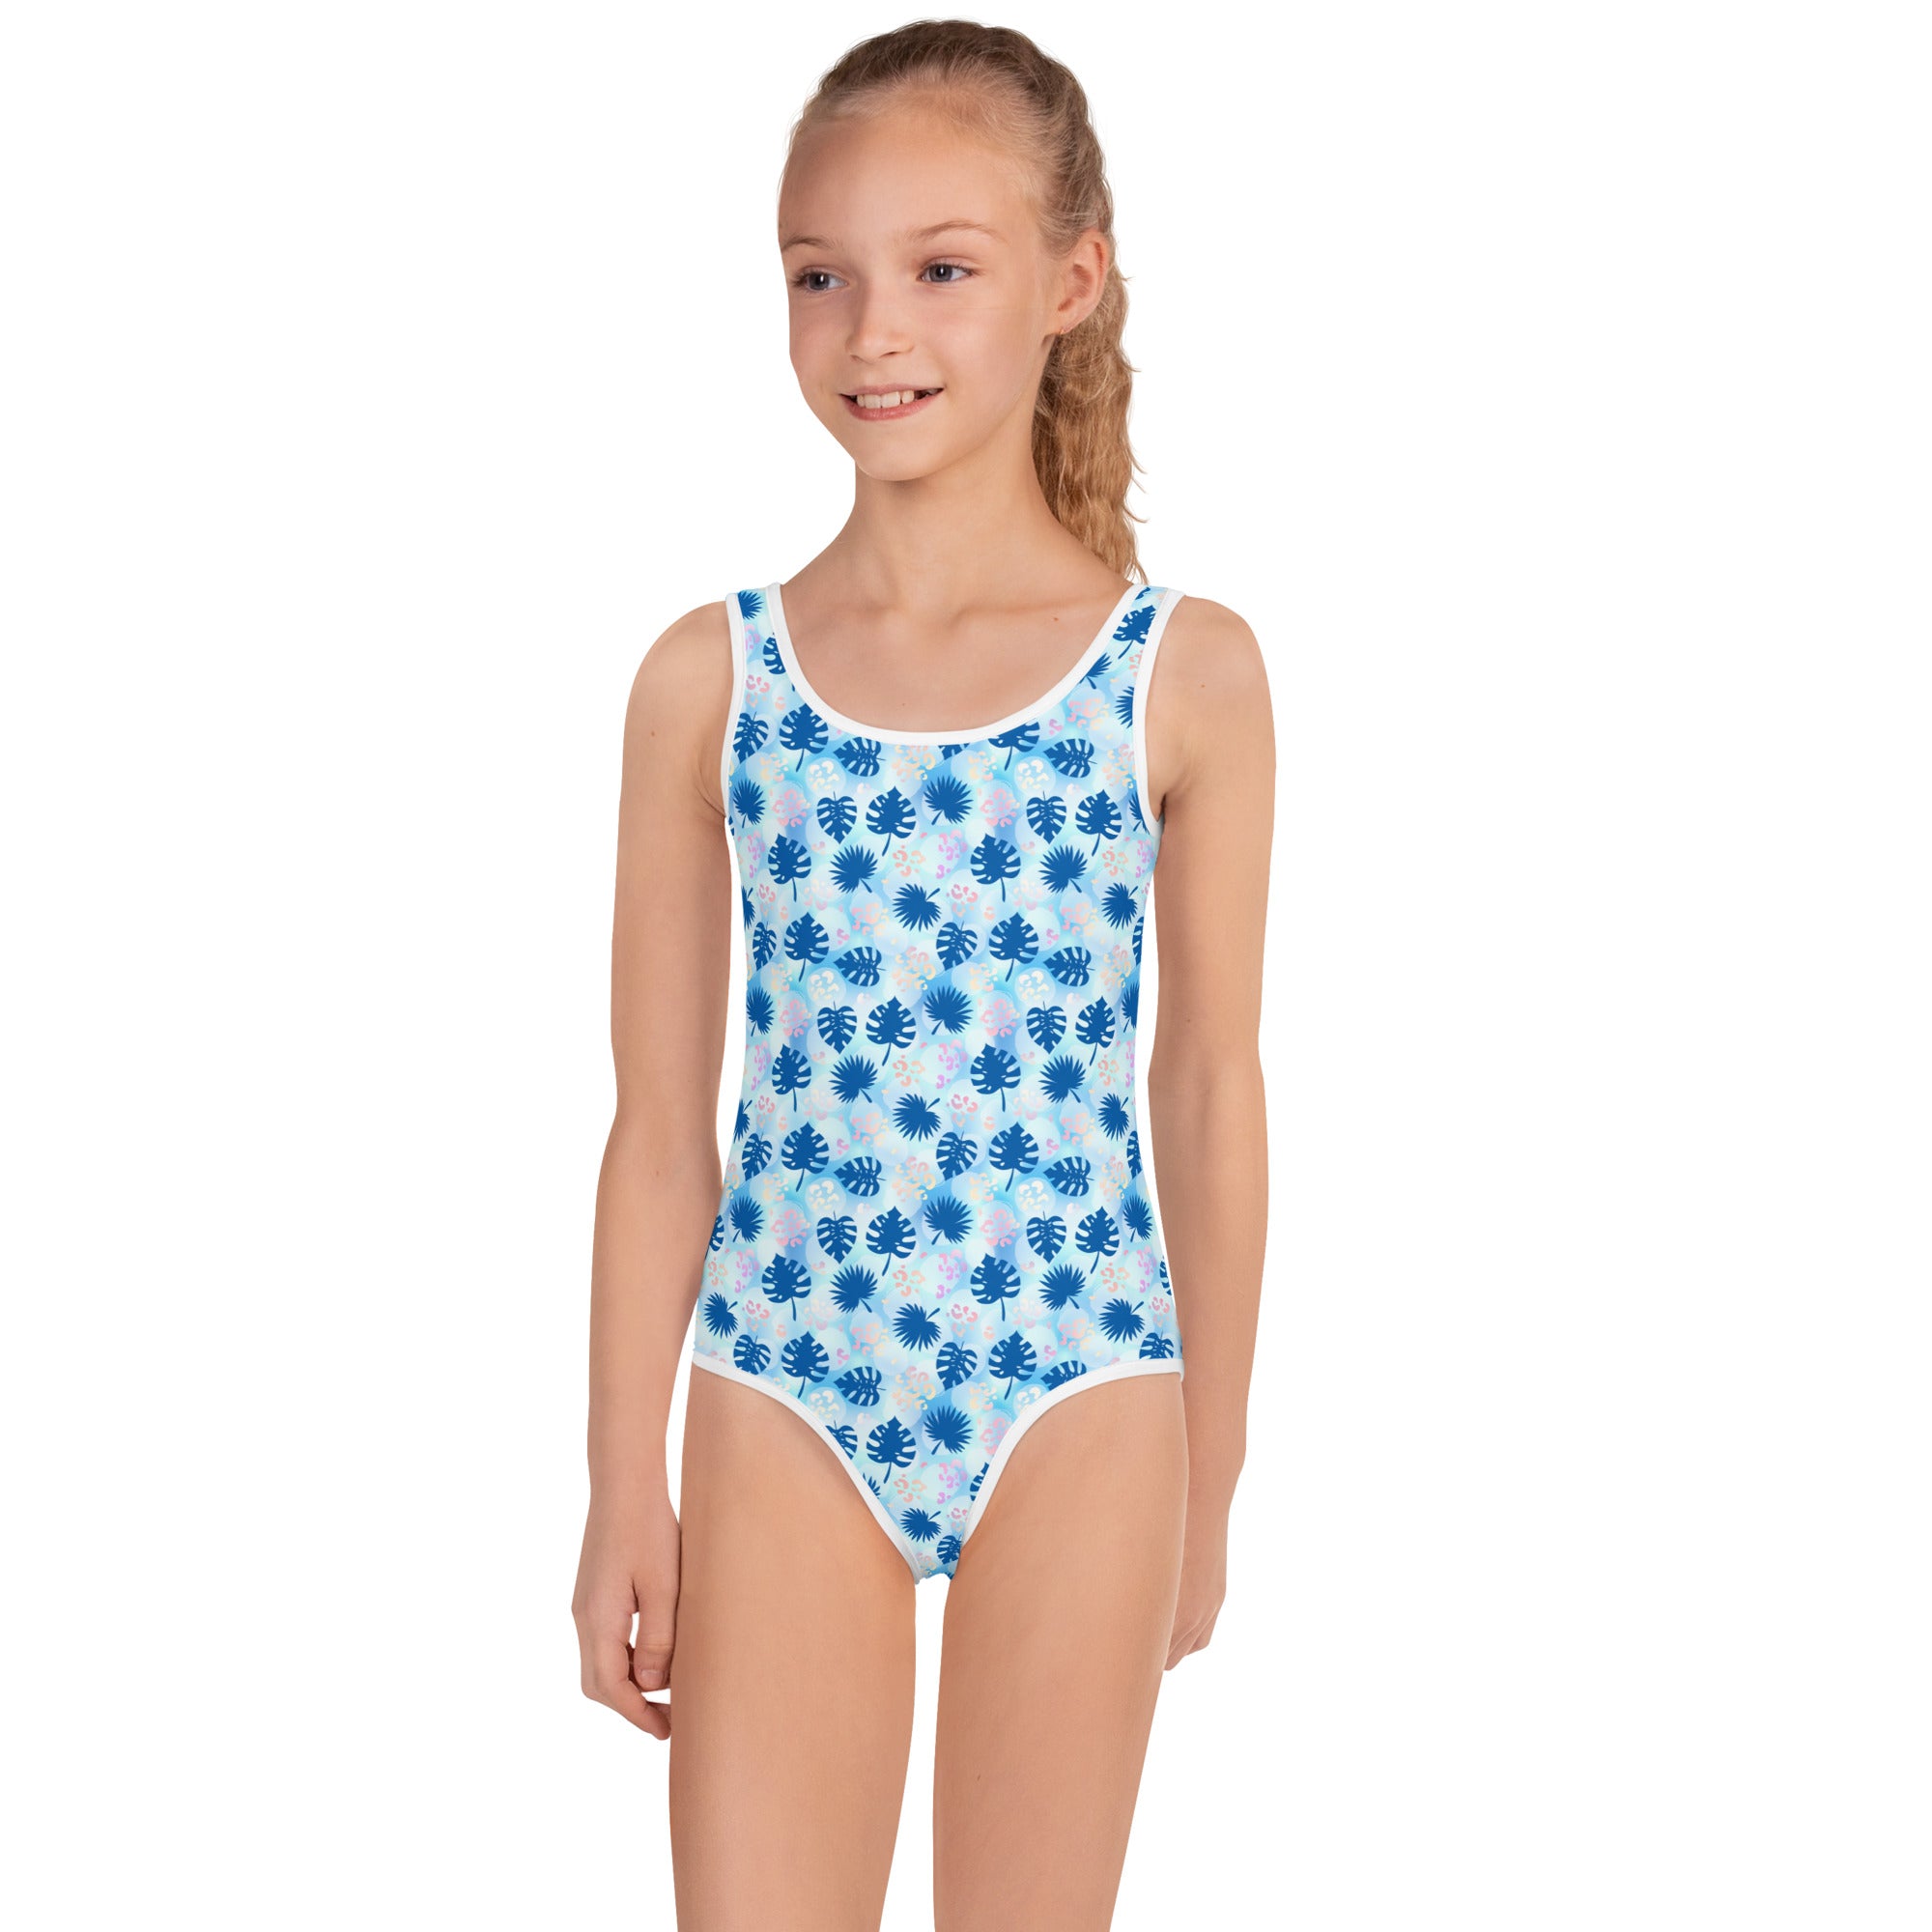 Kids Swimsuit- Summer PALM LEAFS Blue